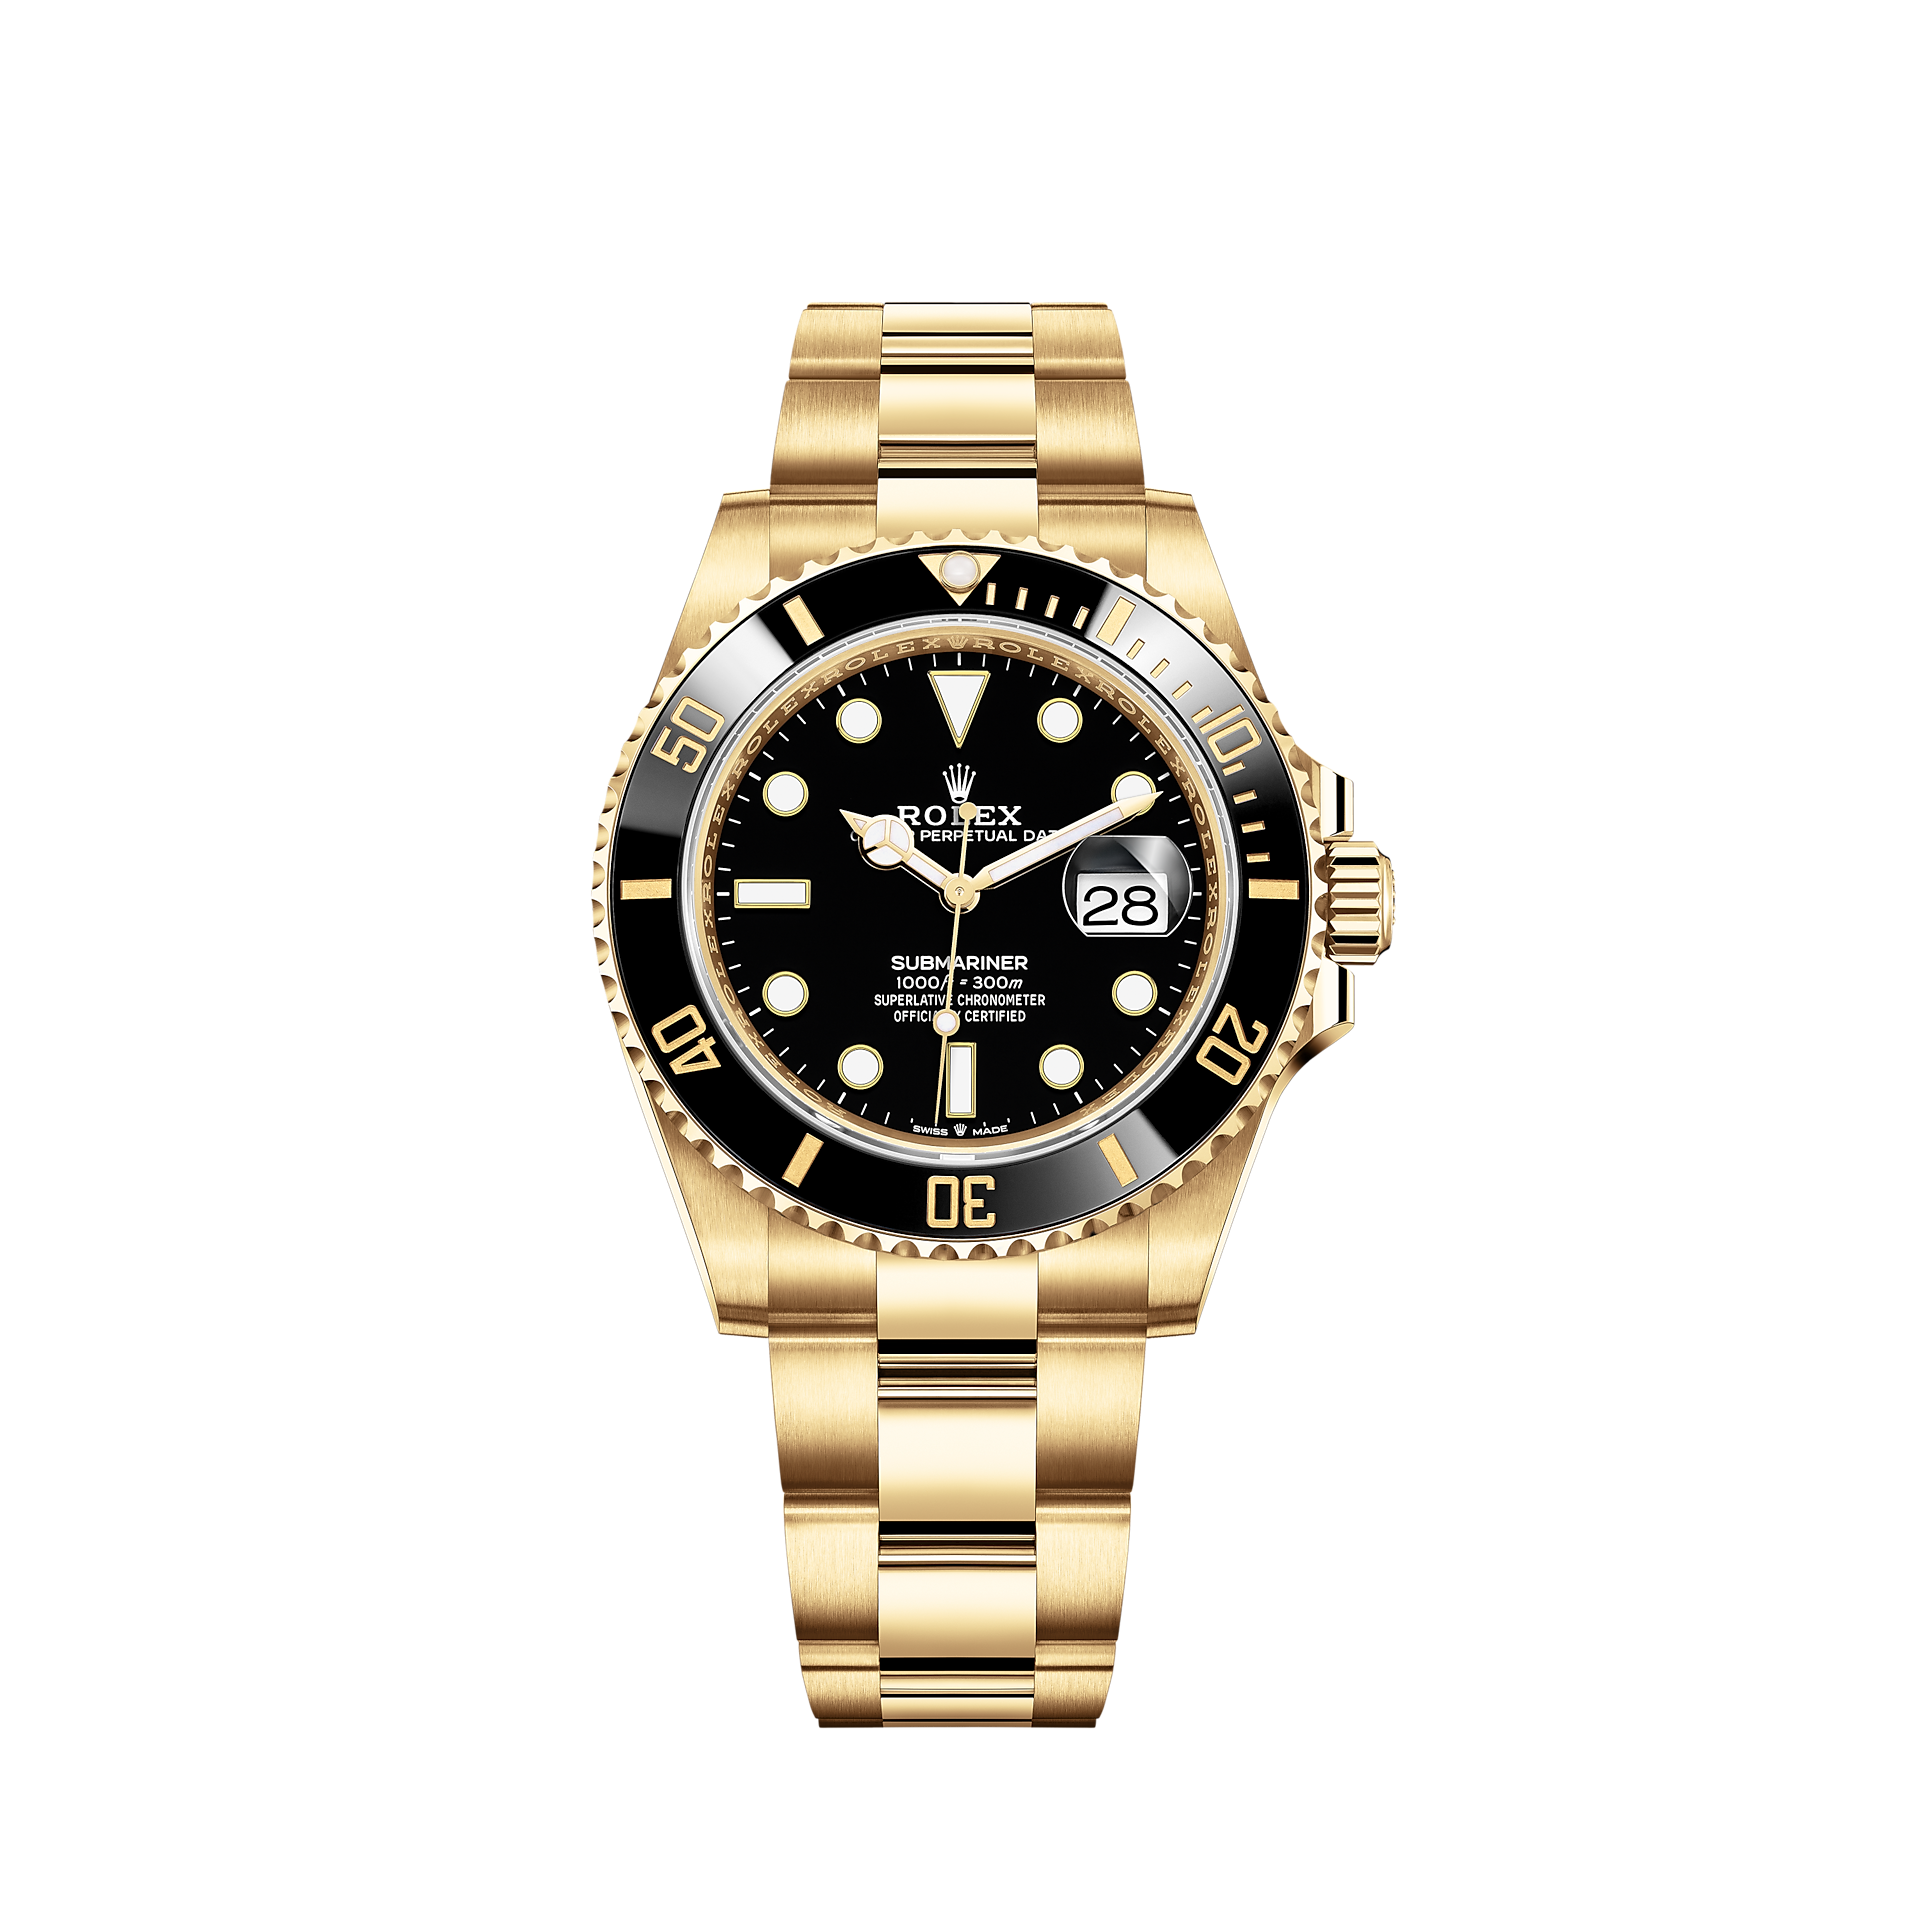 Rolex Submariner Date Watch: 18 ct yellow gold - M126618LN-0002